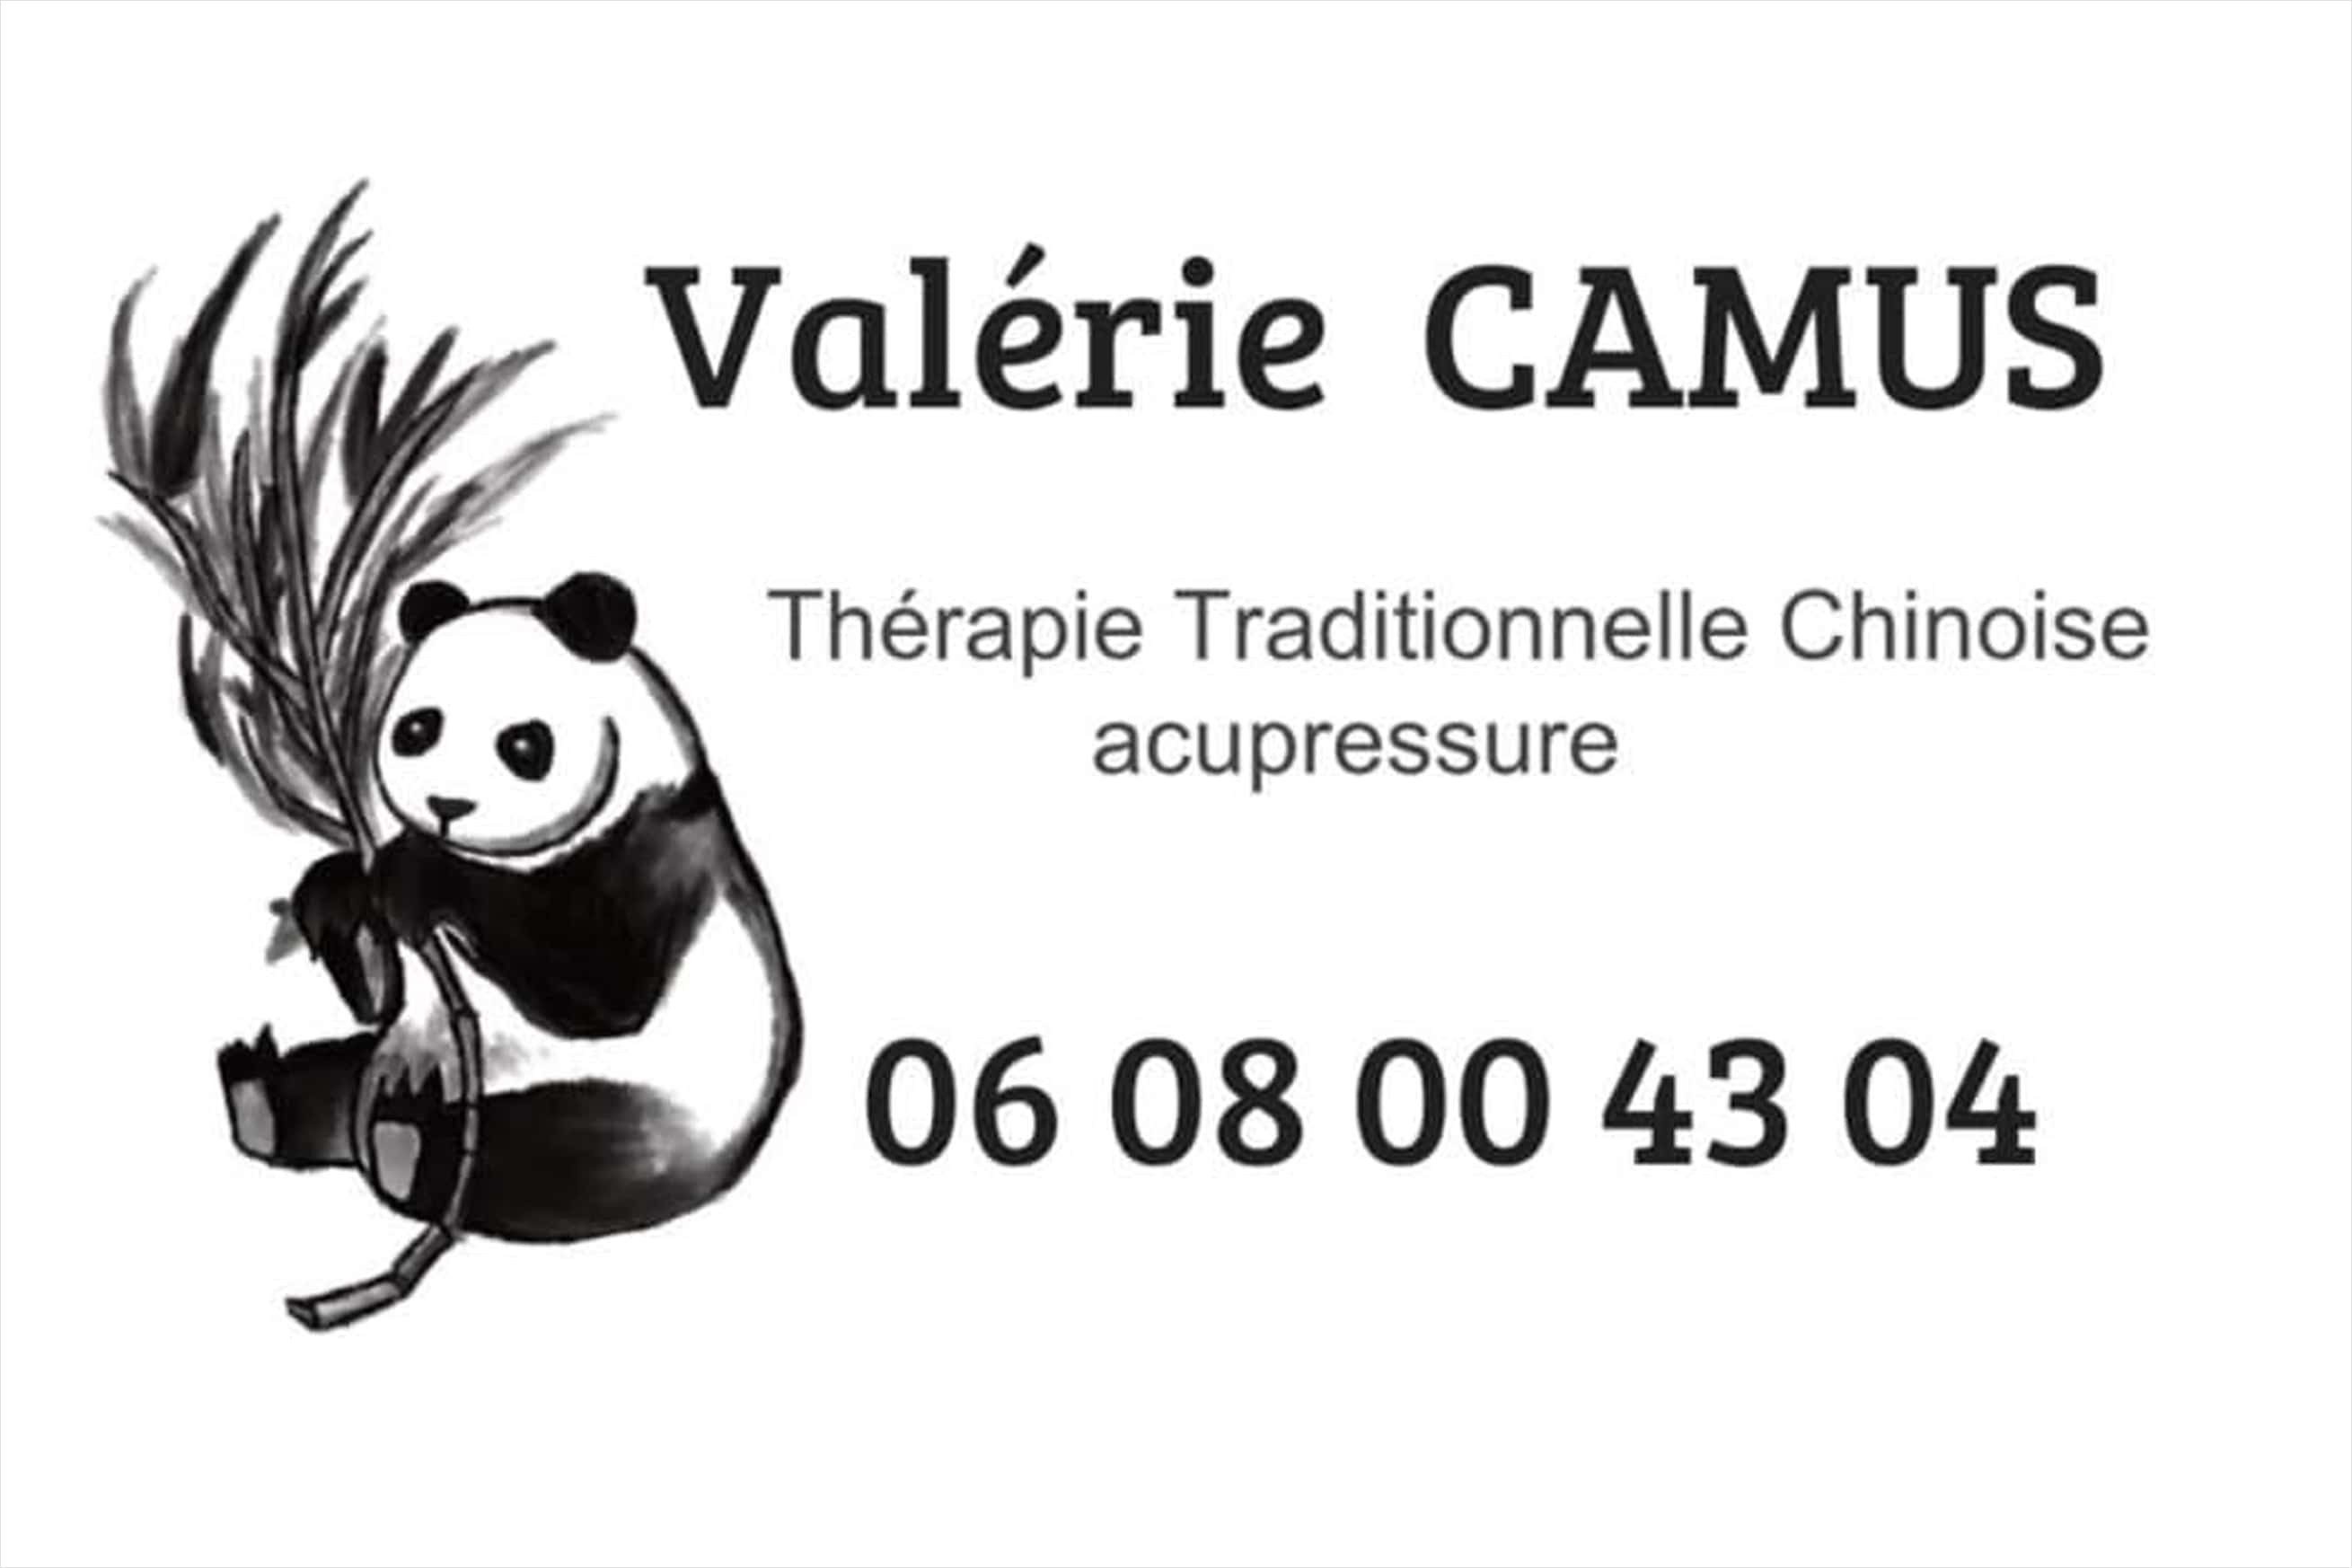 Valérie Camus -Acupressure -Thérapie Traditionnelle chinoise